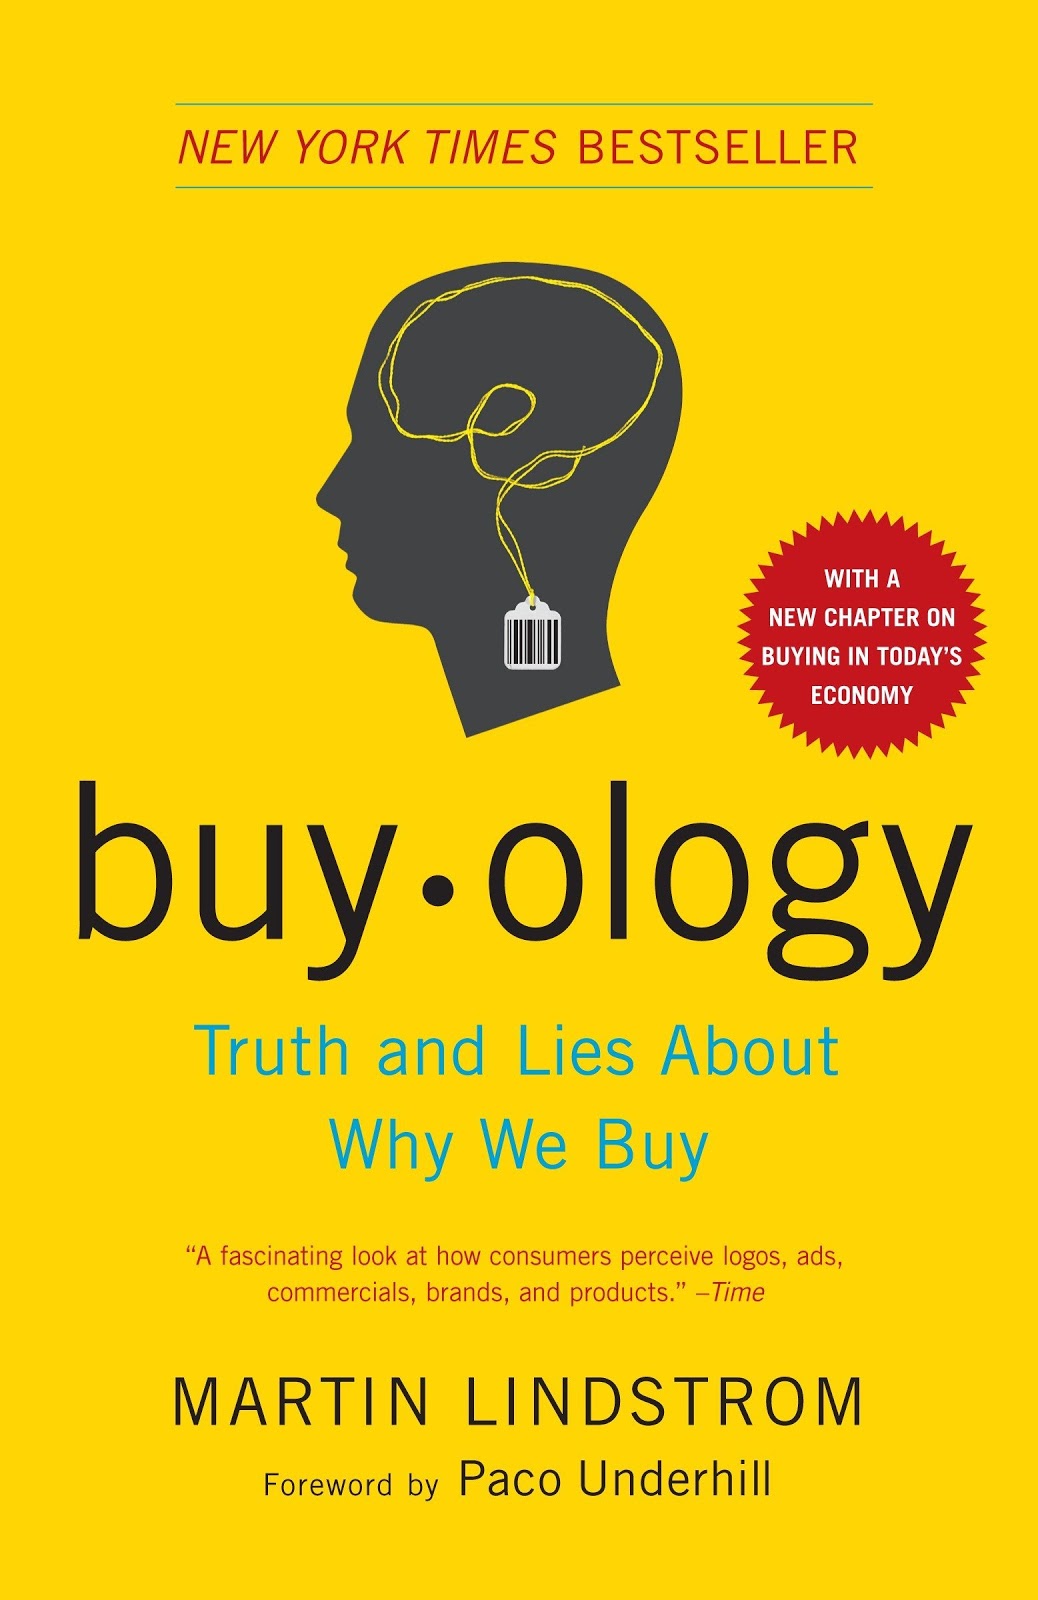 buyology marketing 